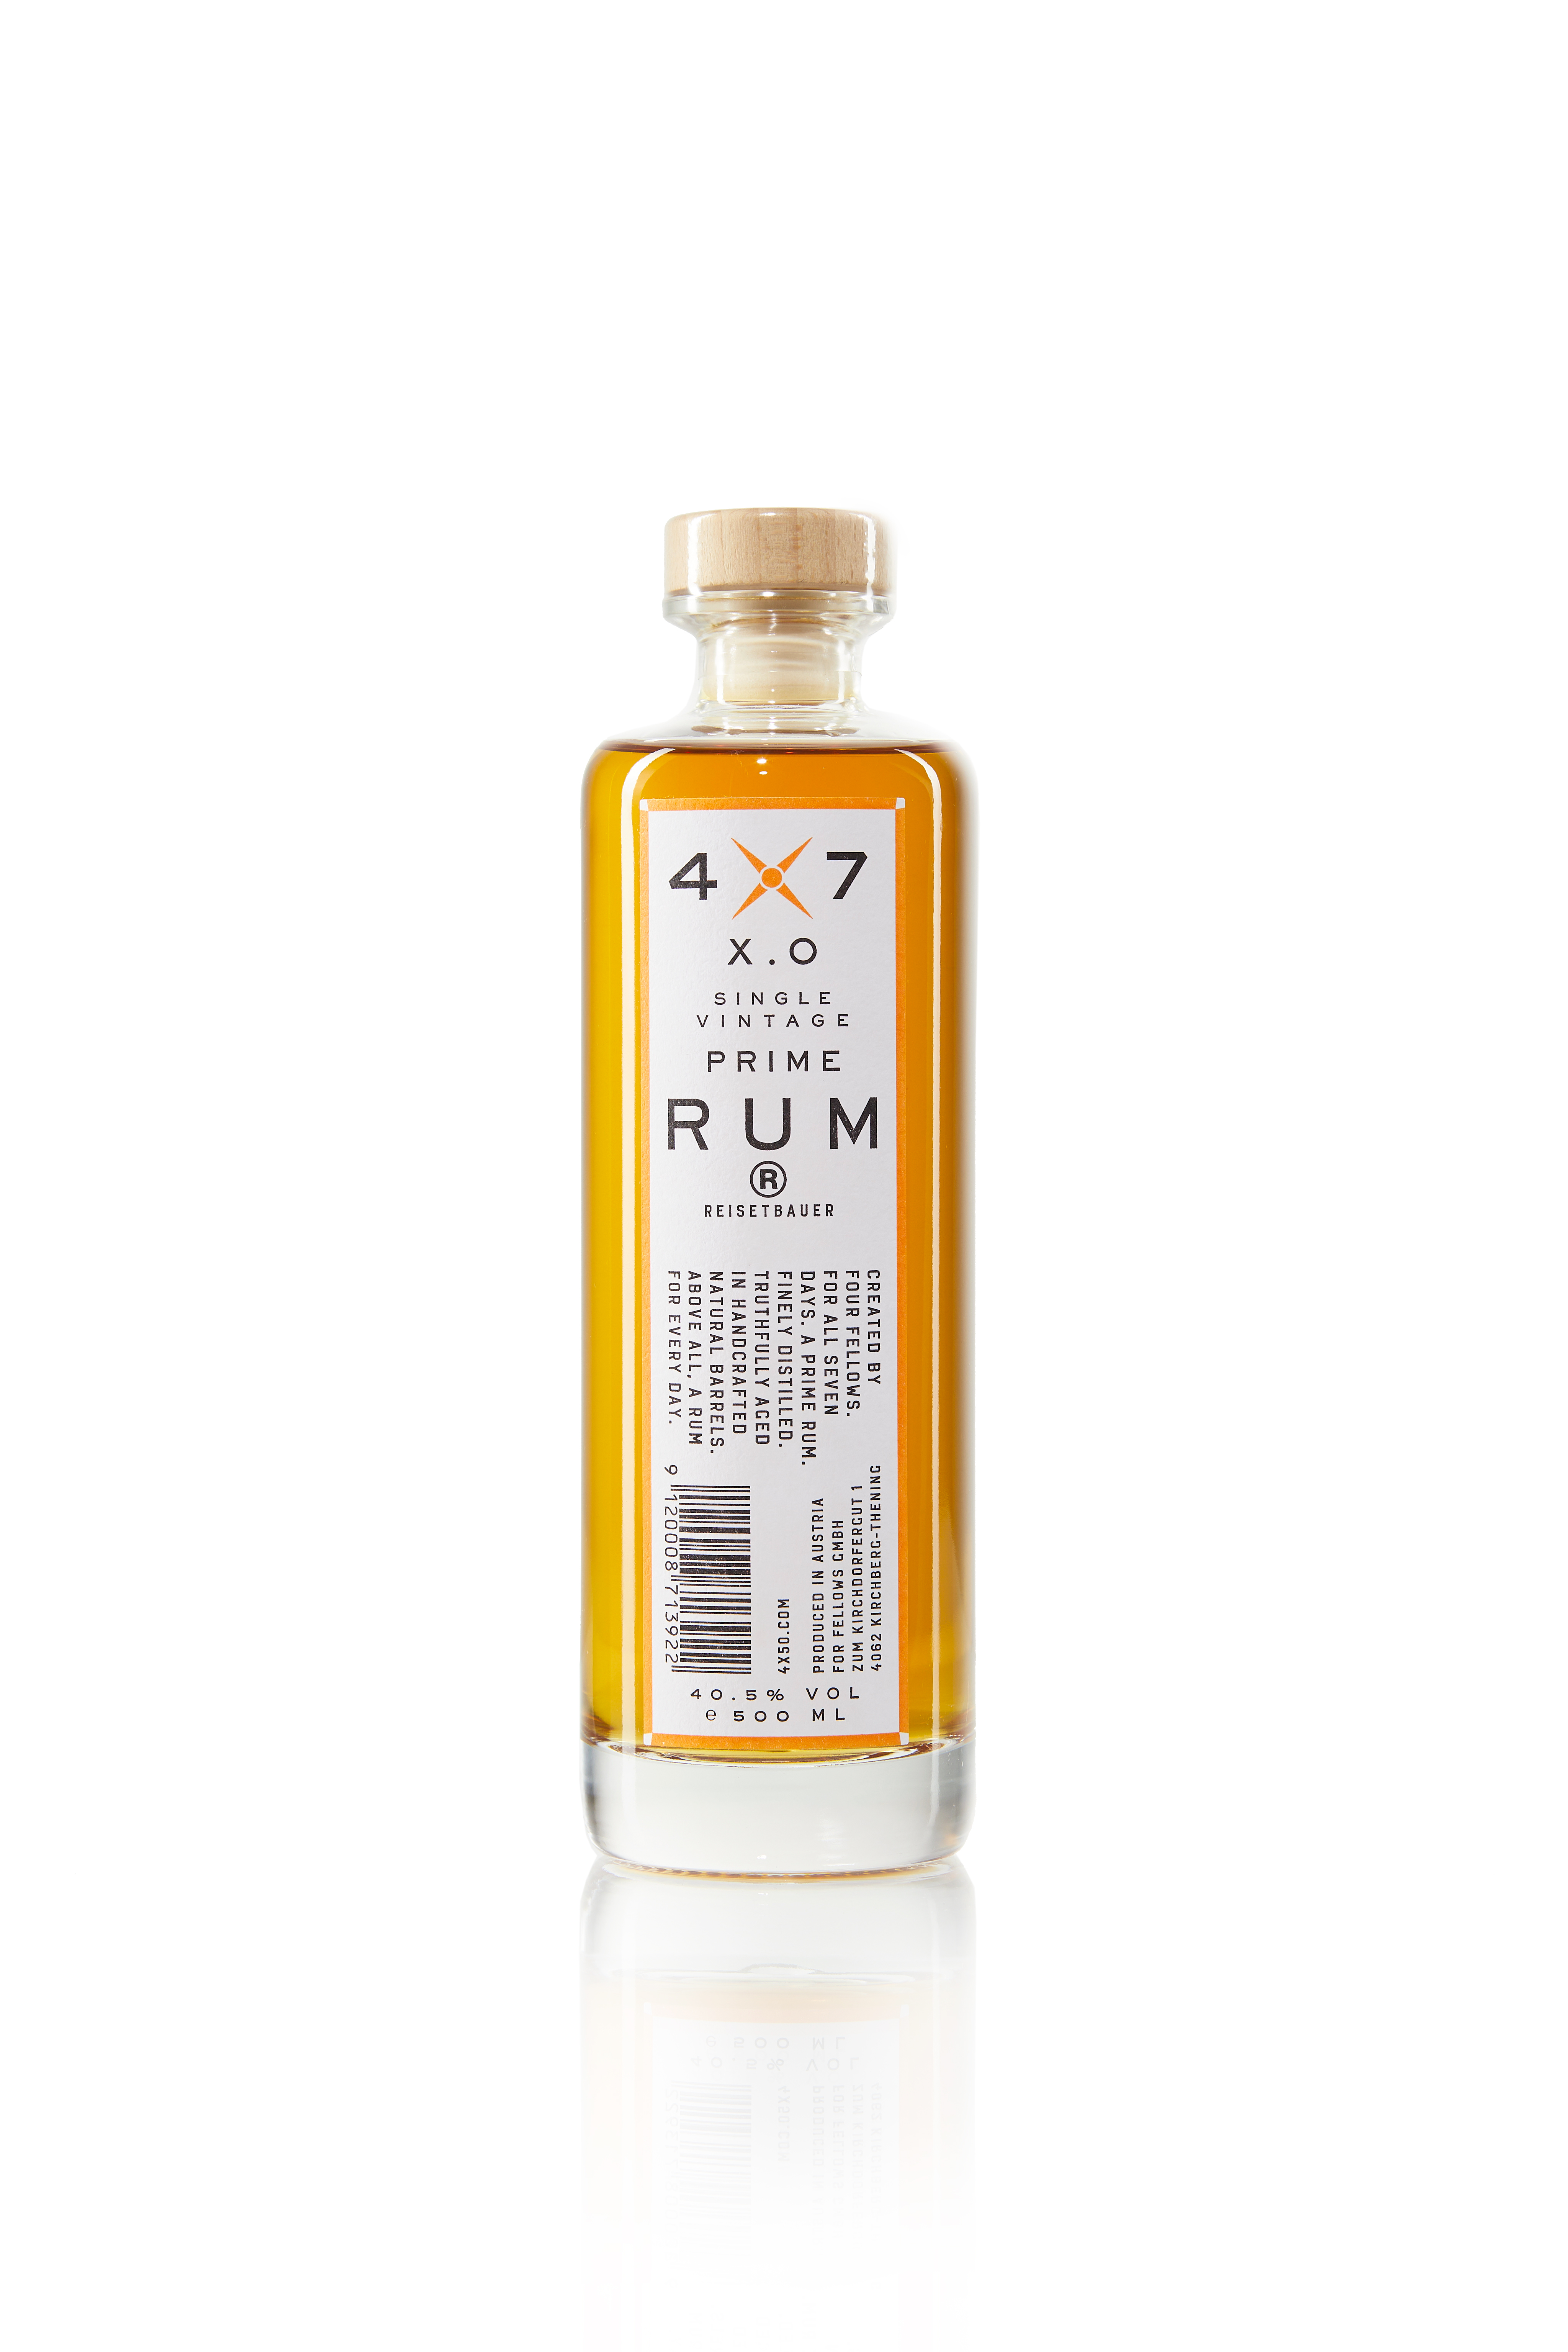 4x7 X.O Single Vintage Prime Rum by Reisetbauer 40,5%vol.